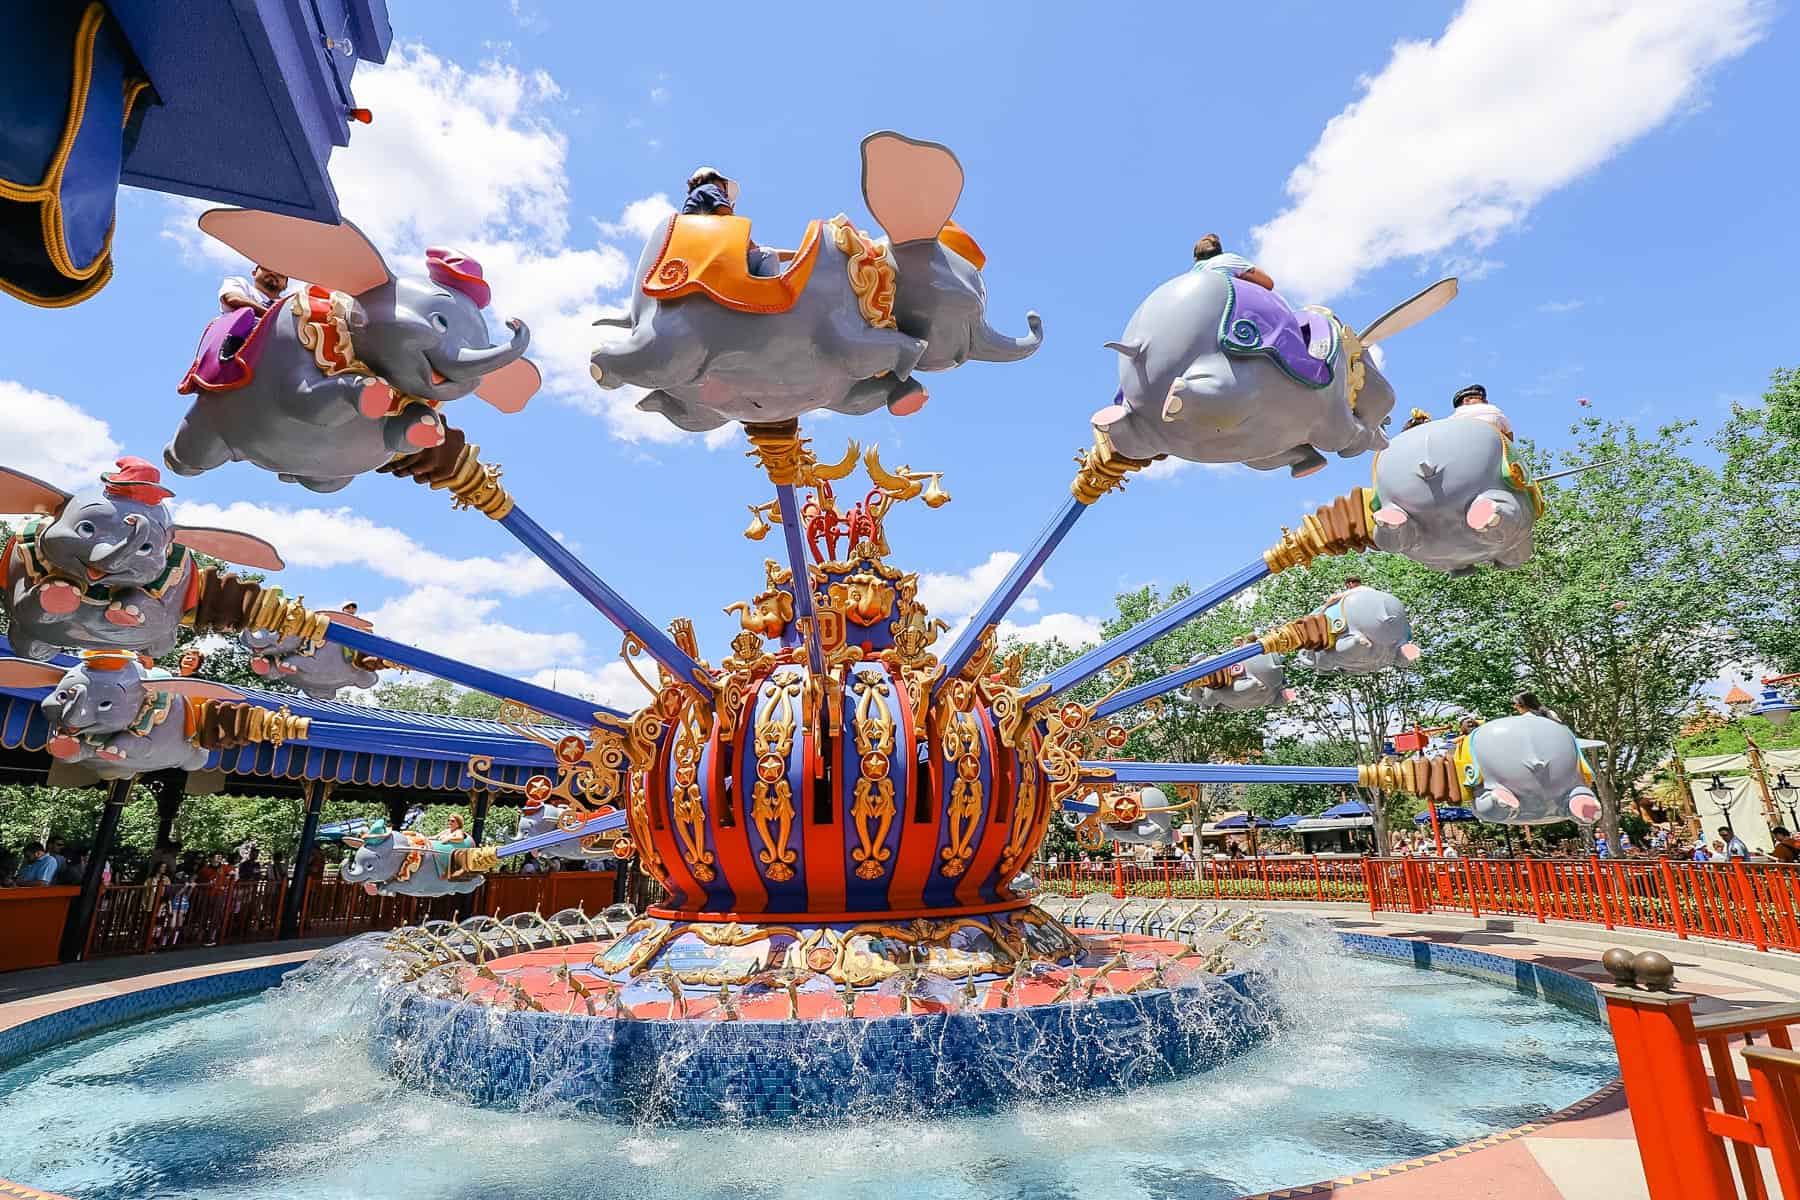 Dumbo ride vehicles spinning over Storybook Circus at Magic Kingdom. 